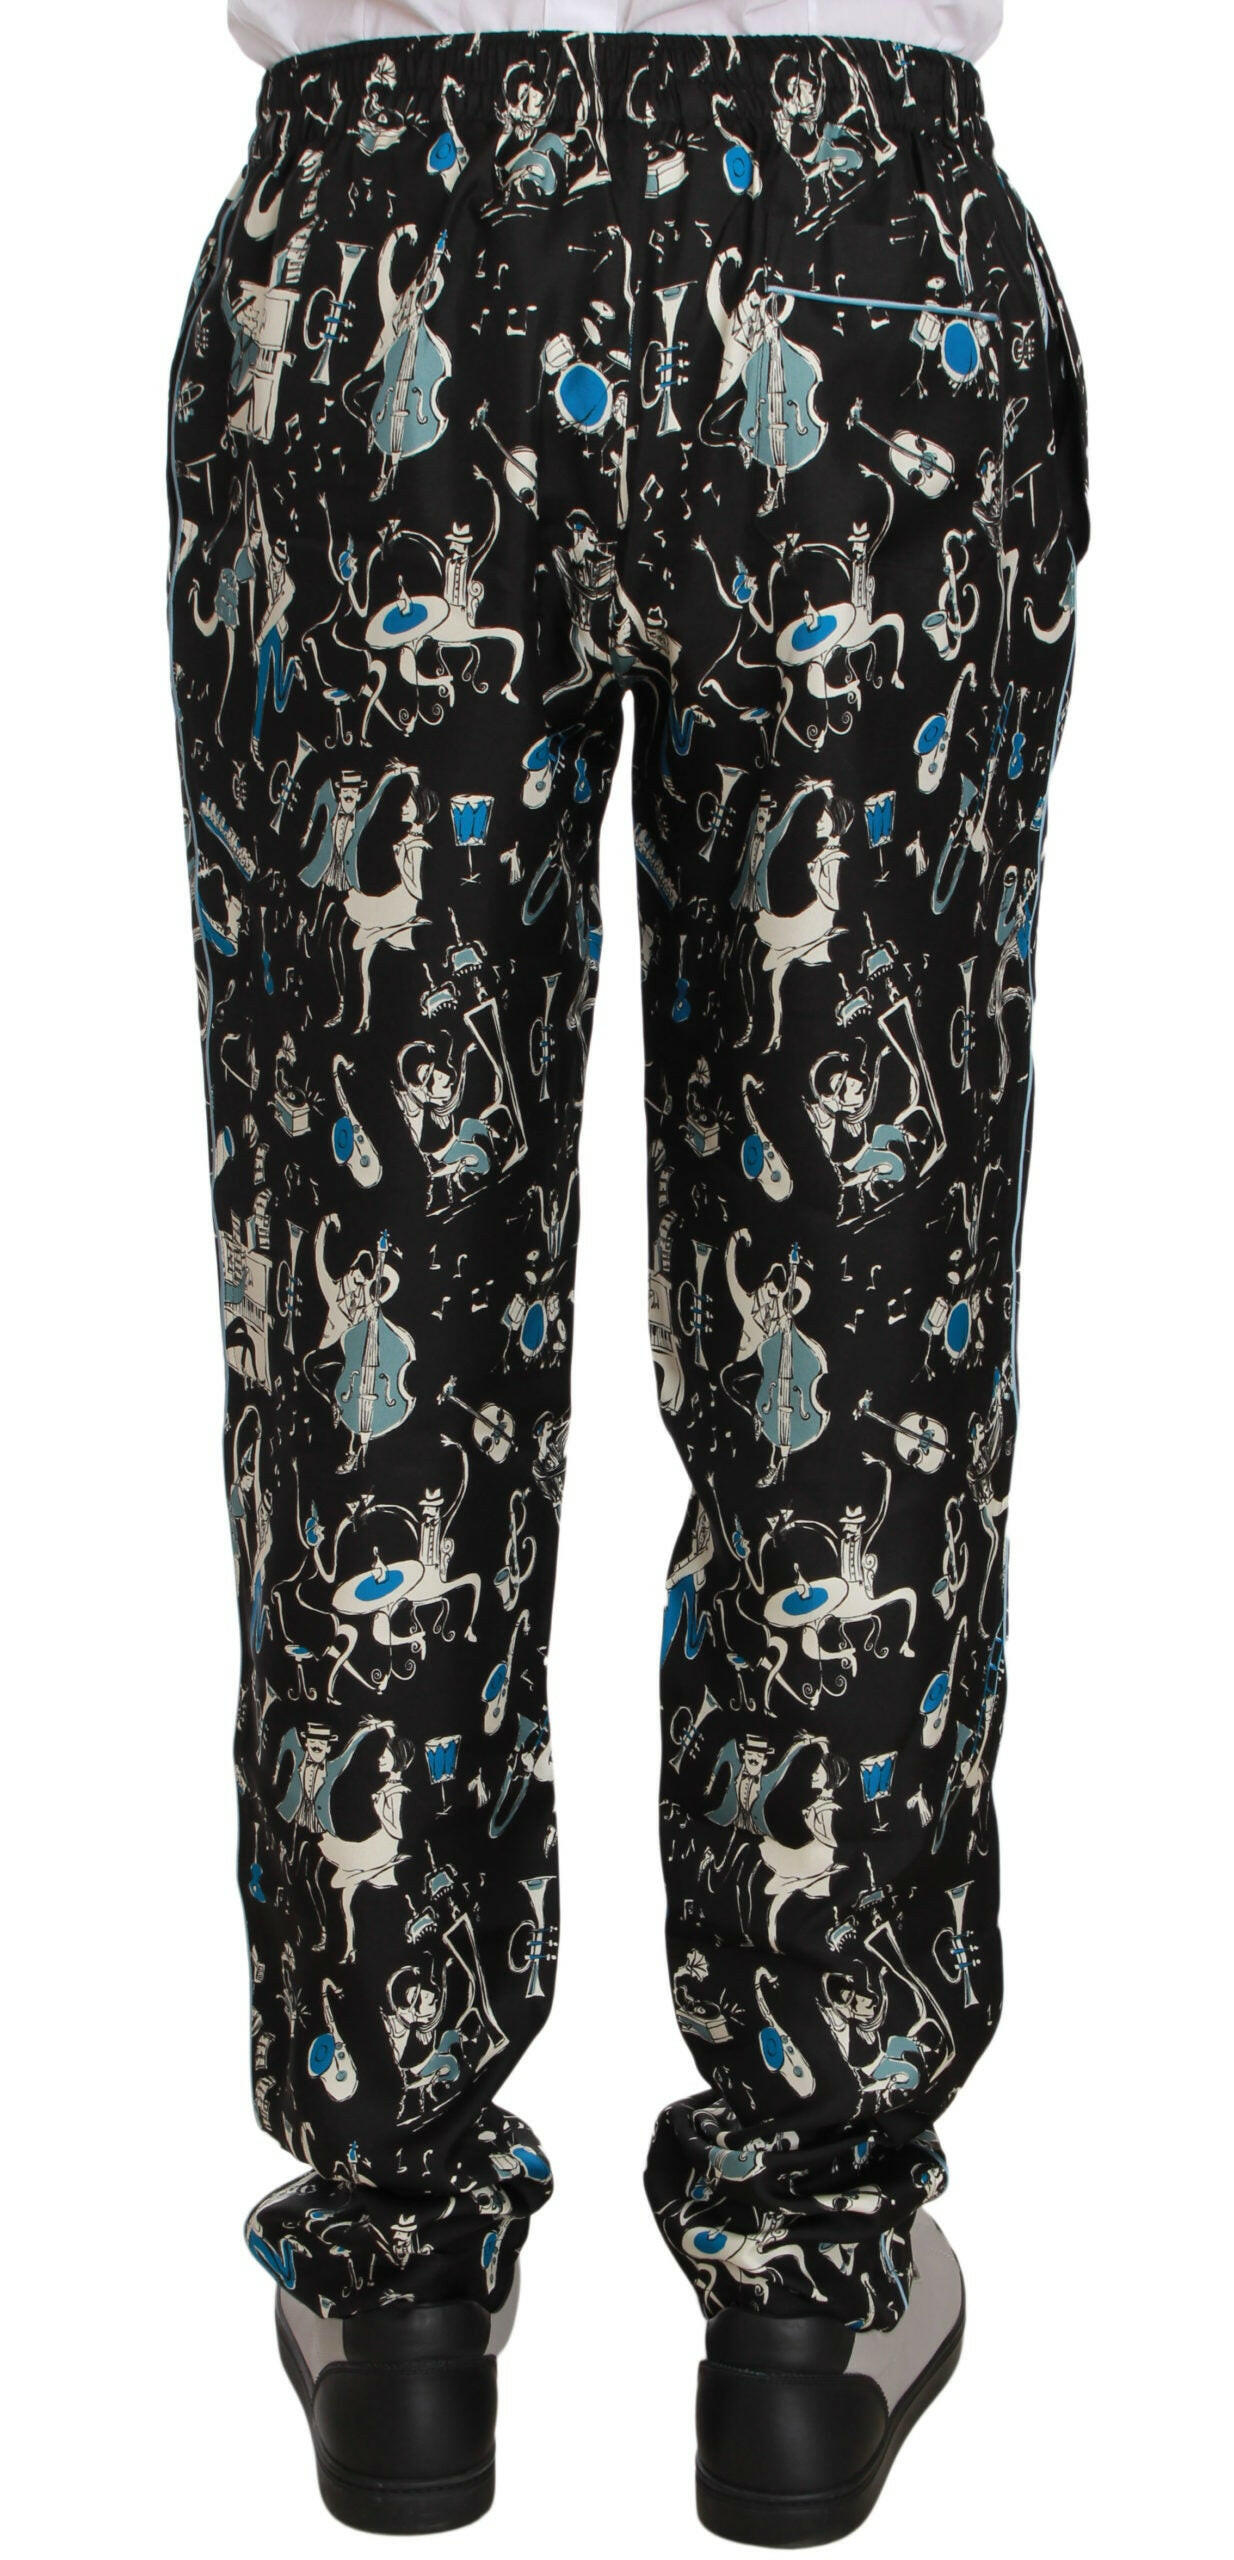 Dolce & Gabbana Black Musical Instrument Sleepwear Pants - GENUINE AUTHENTIC BRAND LLC  